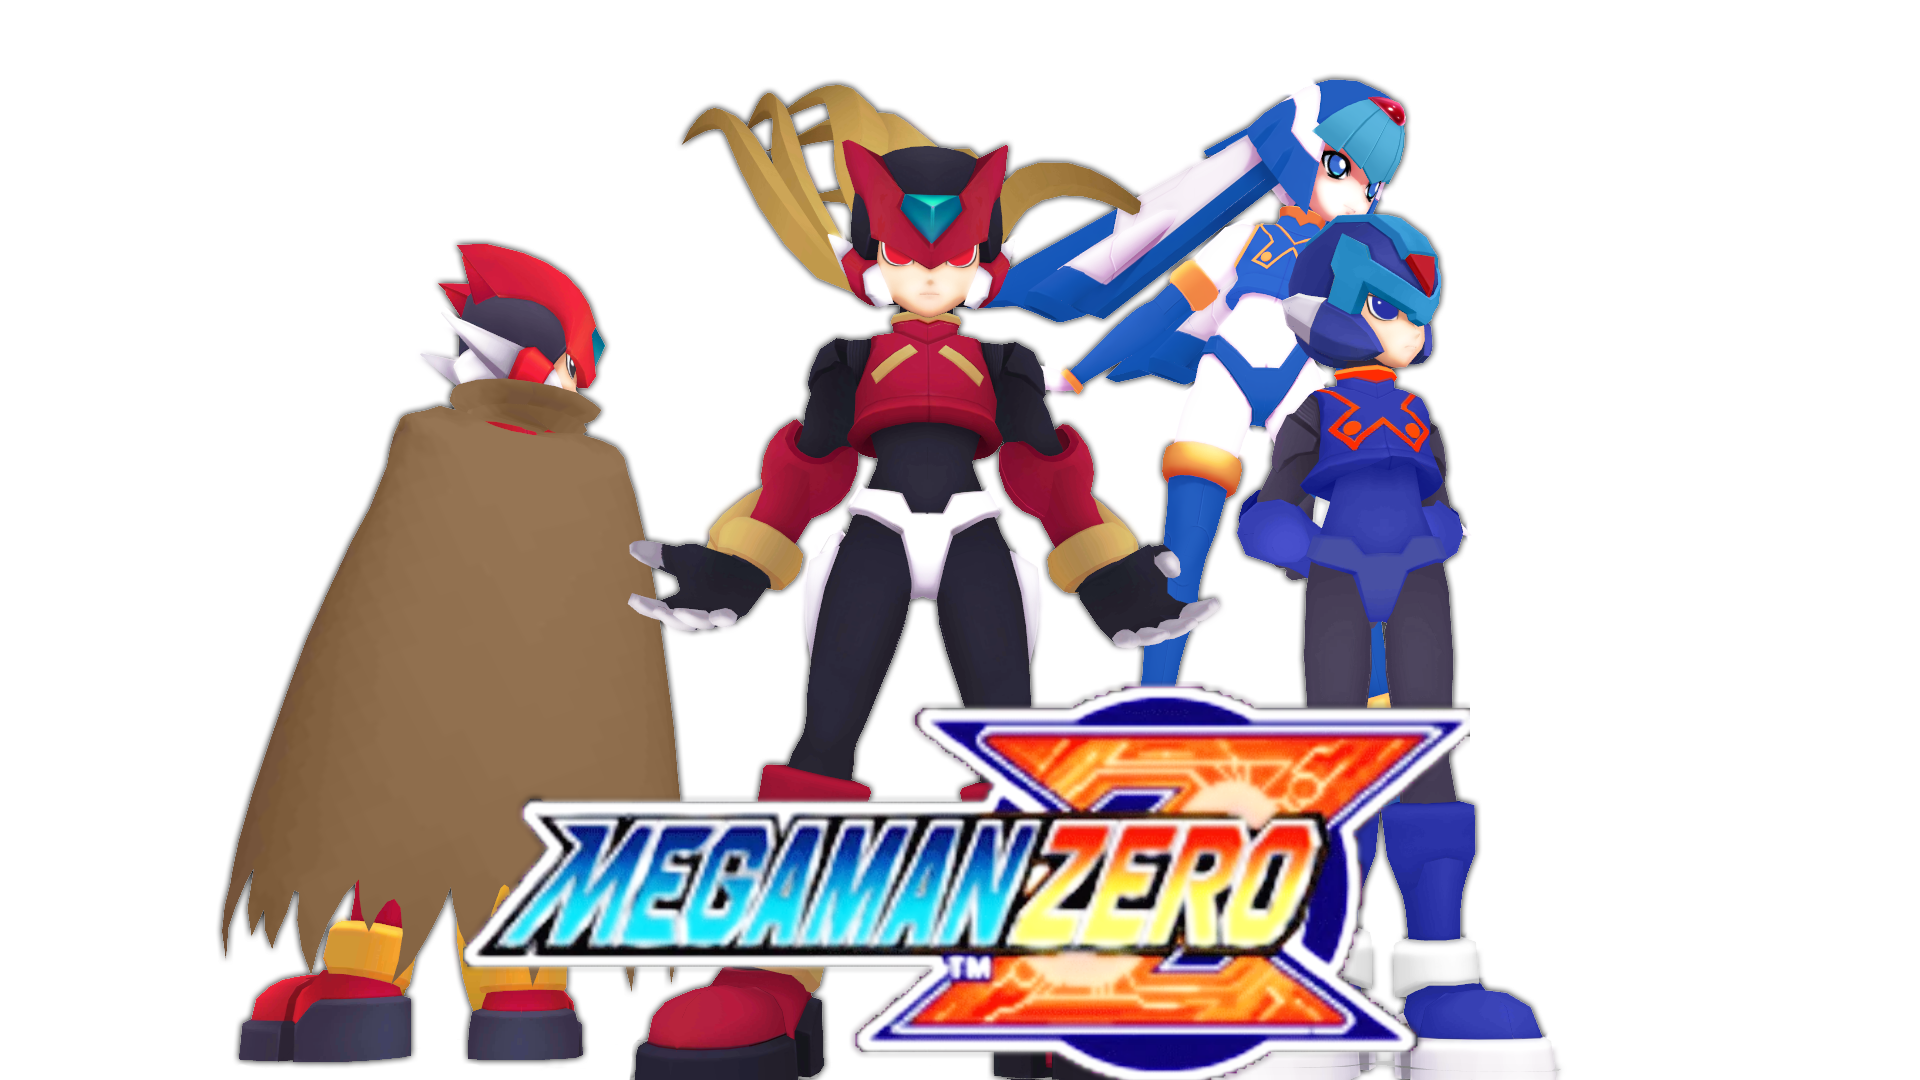 Megaman Zero Pack 1 FINAL UPDATE (MMD DL) by UltimateMMD on DeviantArt